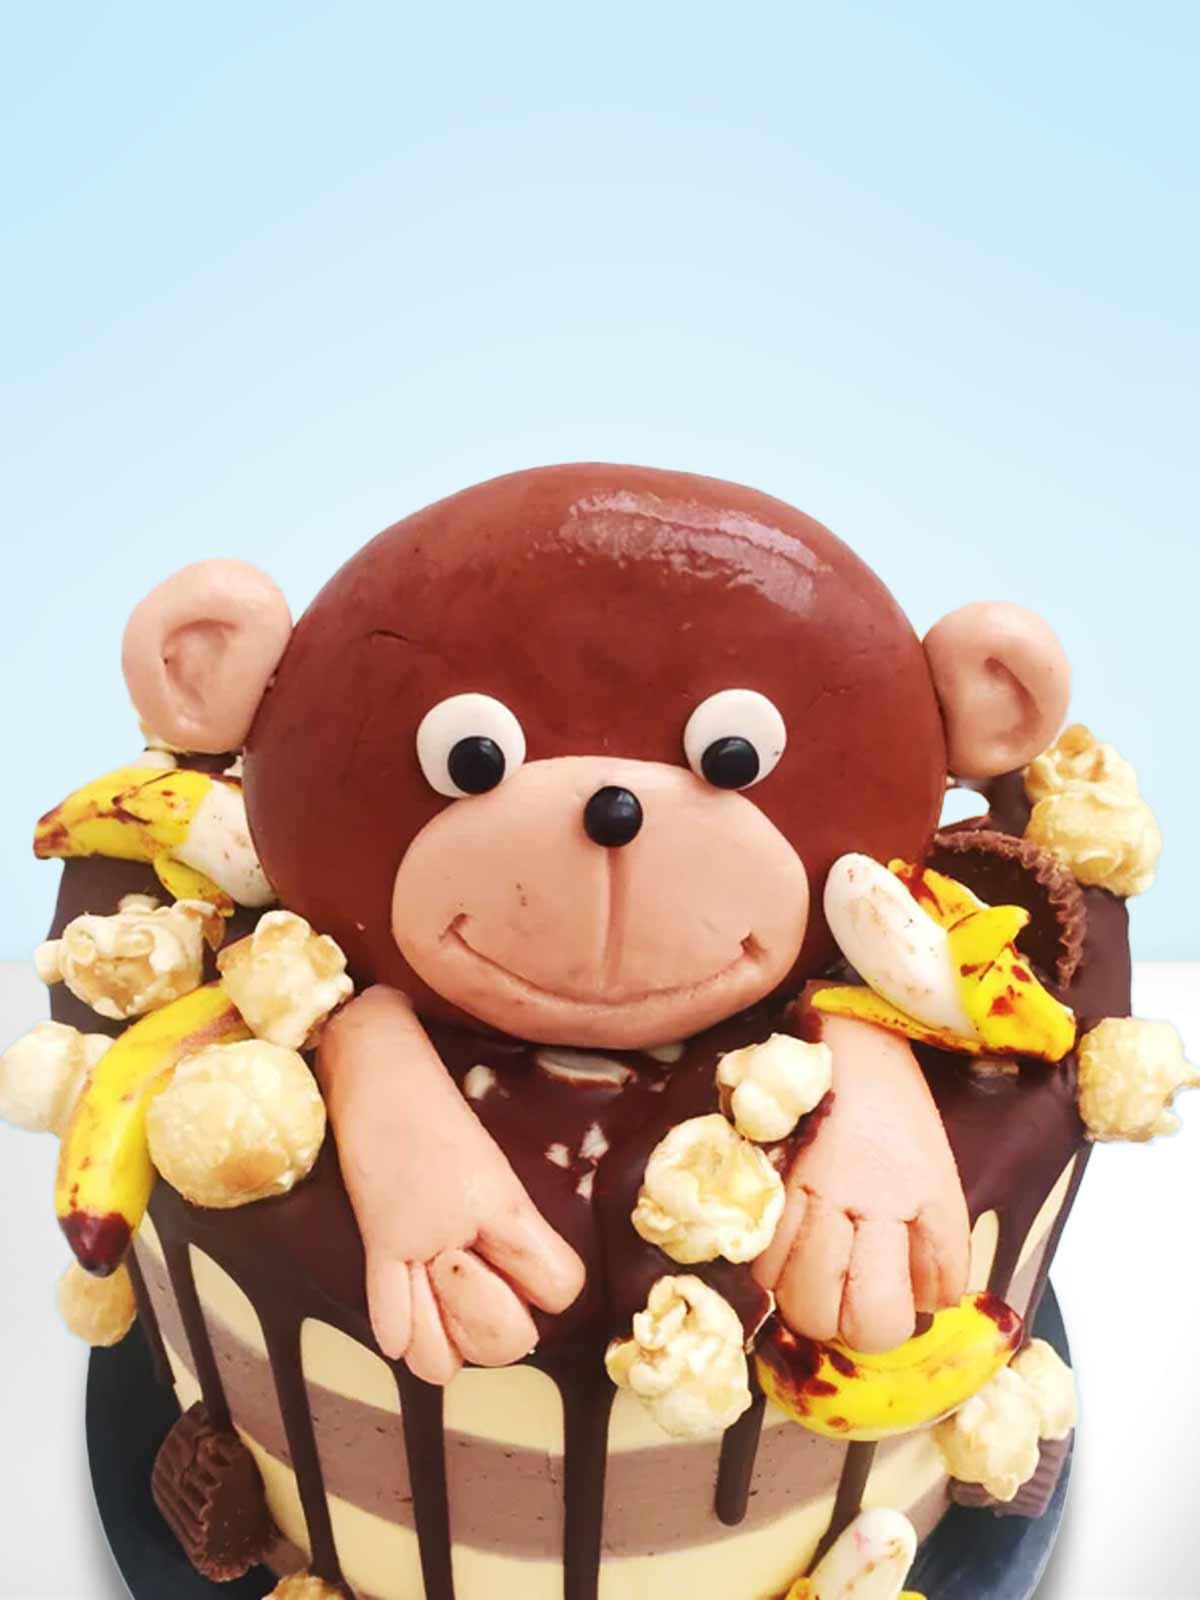 Marcel the Monkey Cake to Buy